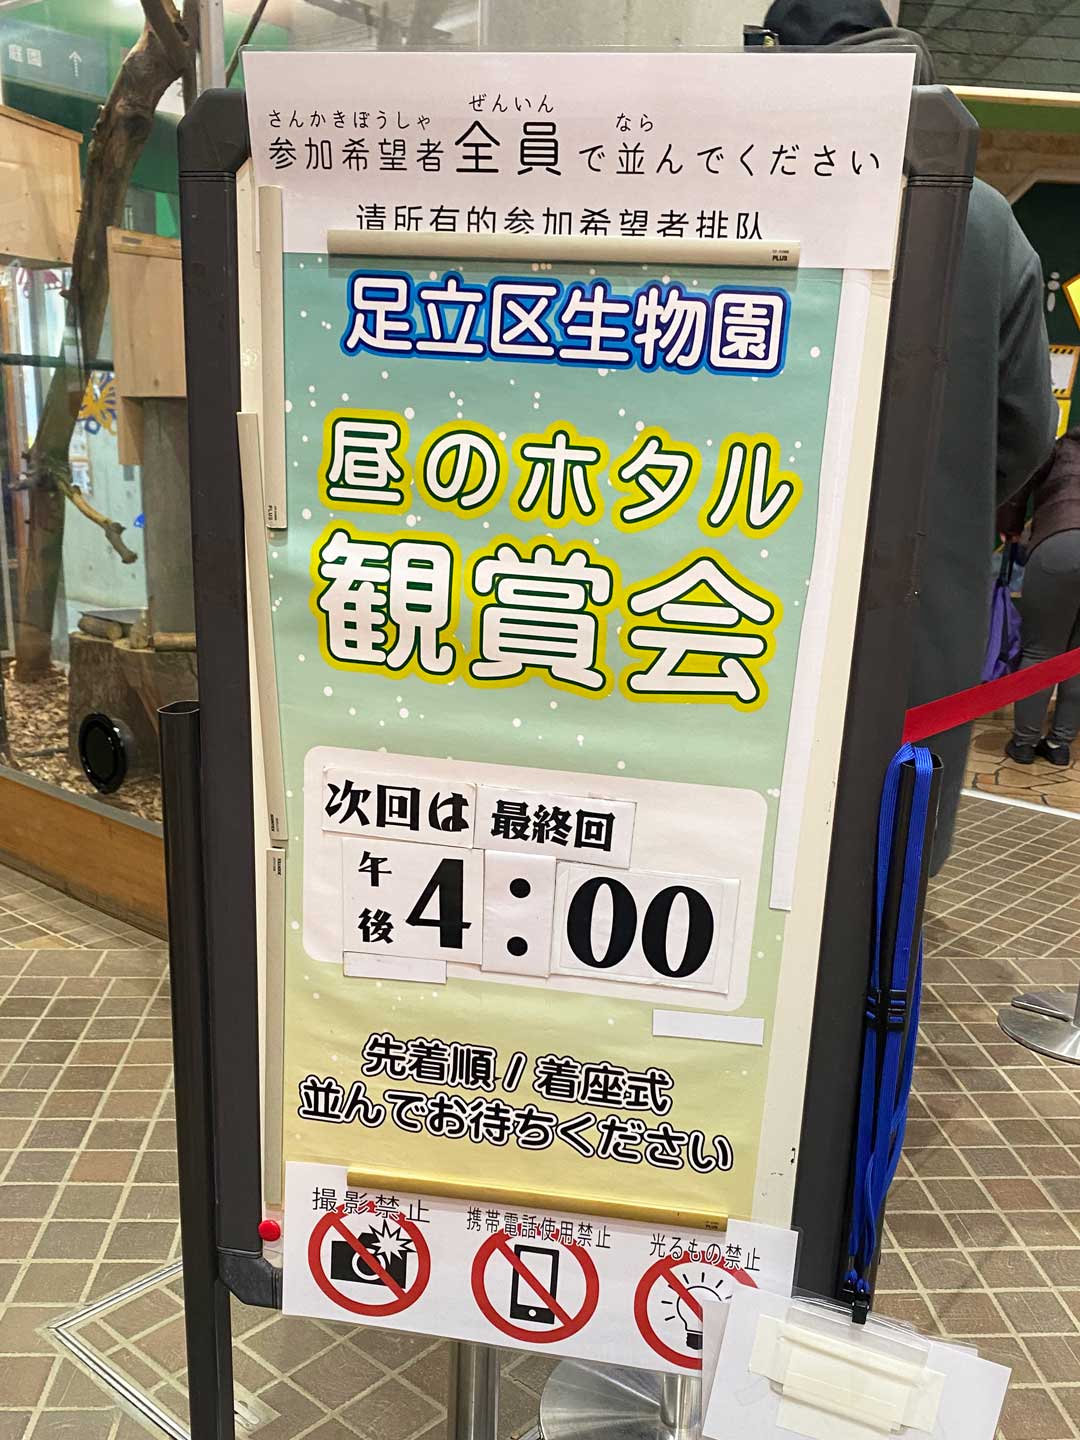 元渕江公園 足立区生物園 動物園 子連れ ホタル観賞会